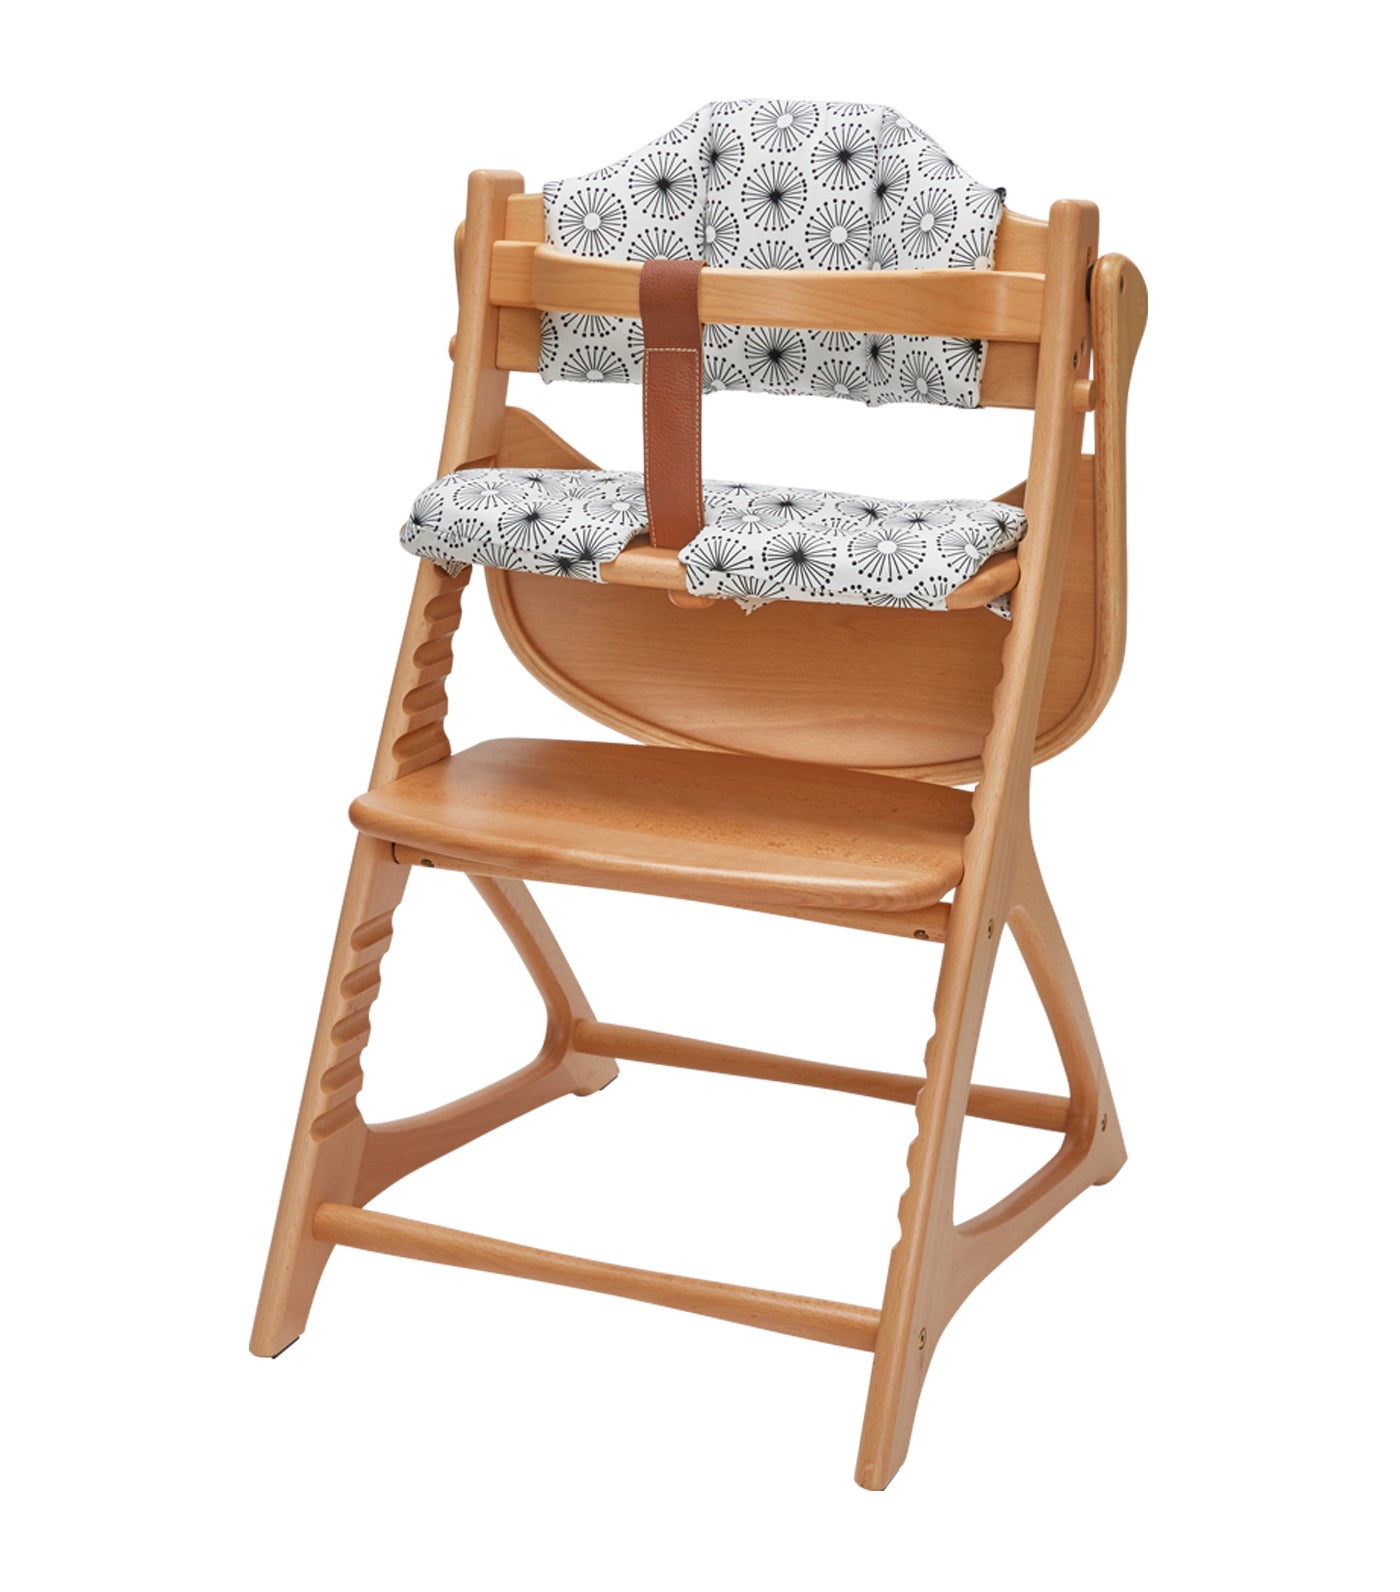 Materna/Affel Chair Cushion - Dandelion